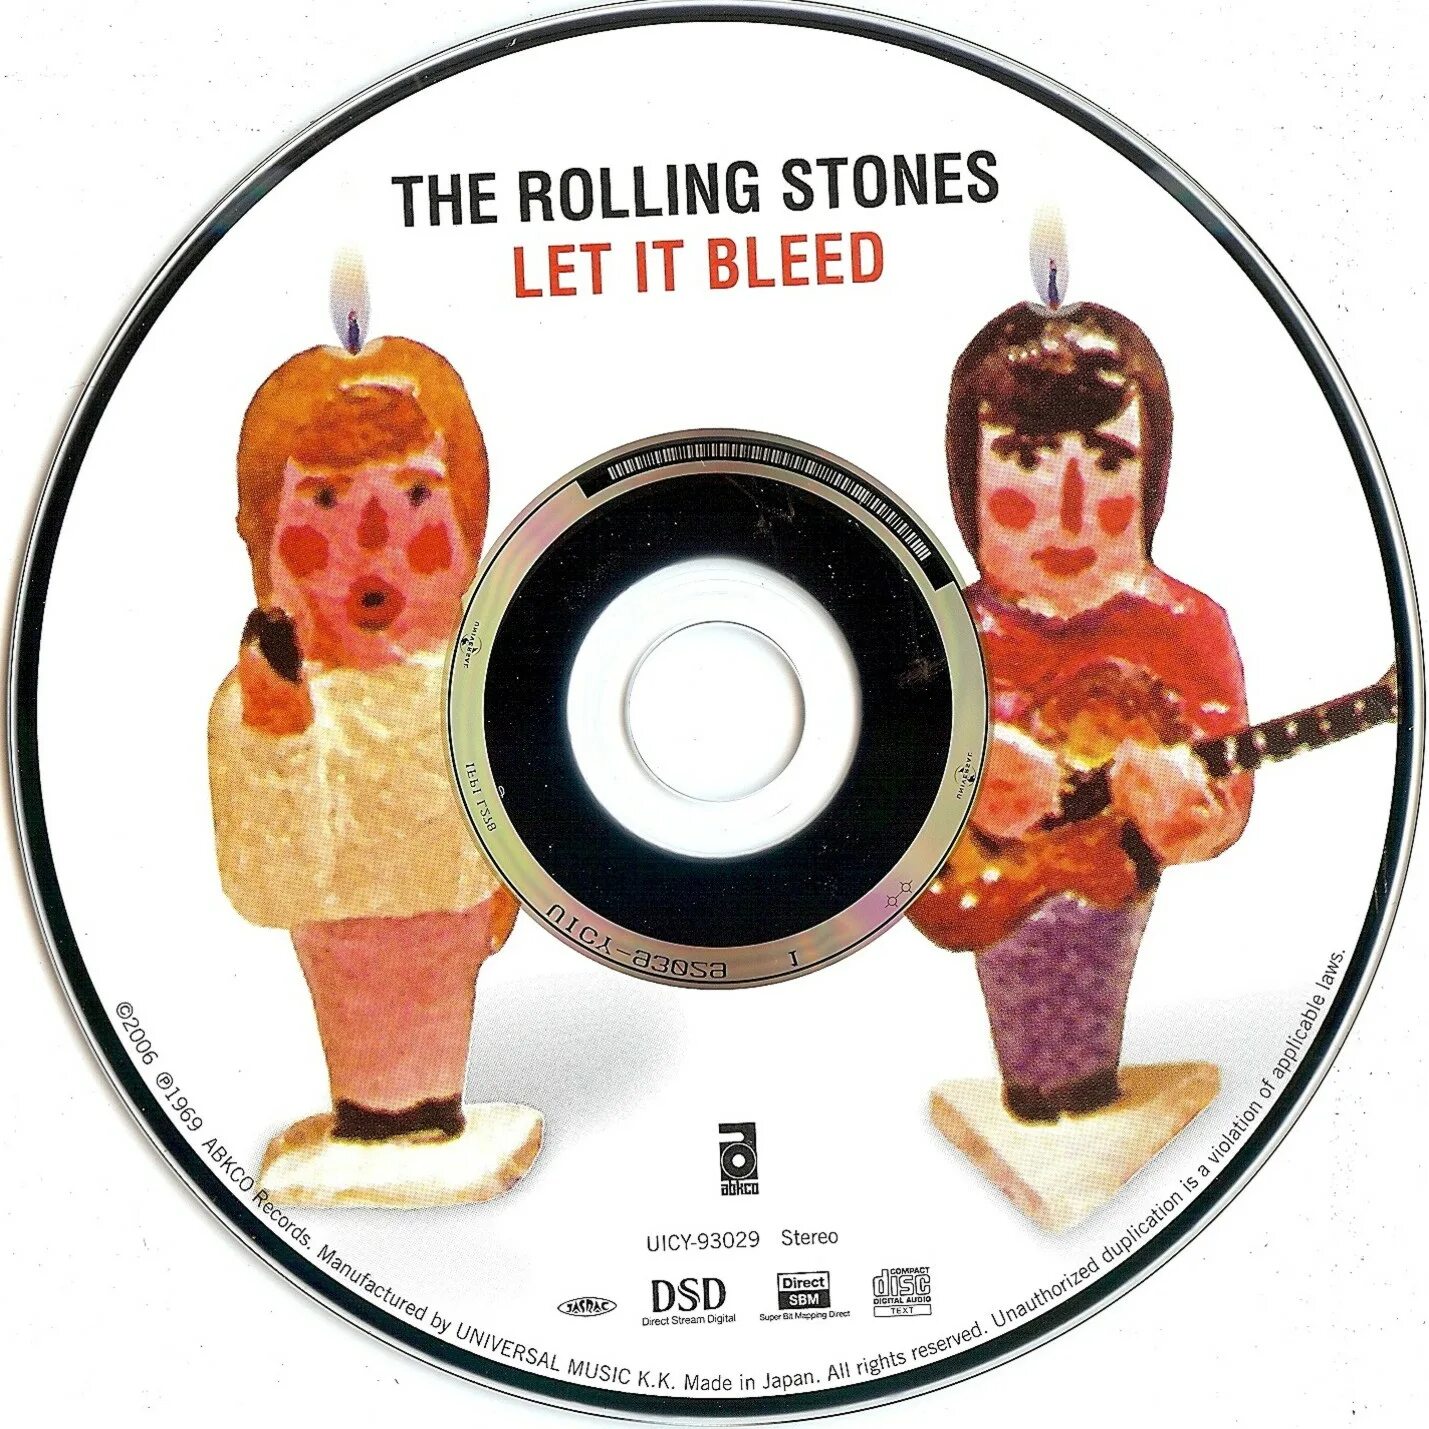 Rolling Stones 1969. The Rolling Stones Let it Bleed 1969. Роллинг стоунз альбом 1969. Let it Bleed the Rolling Stones альбом.